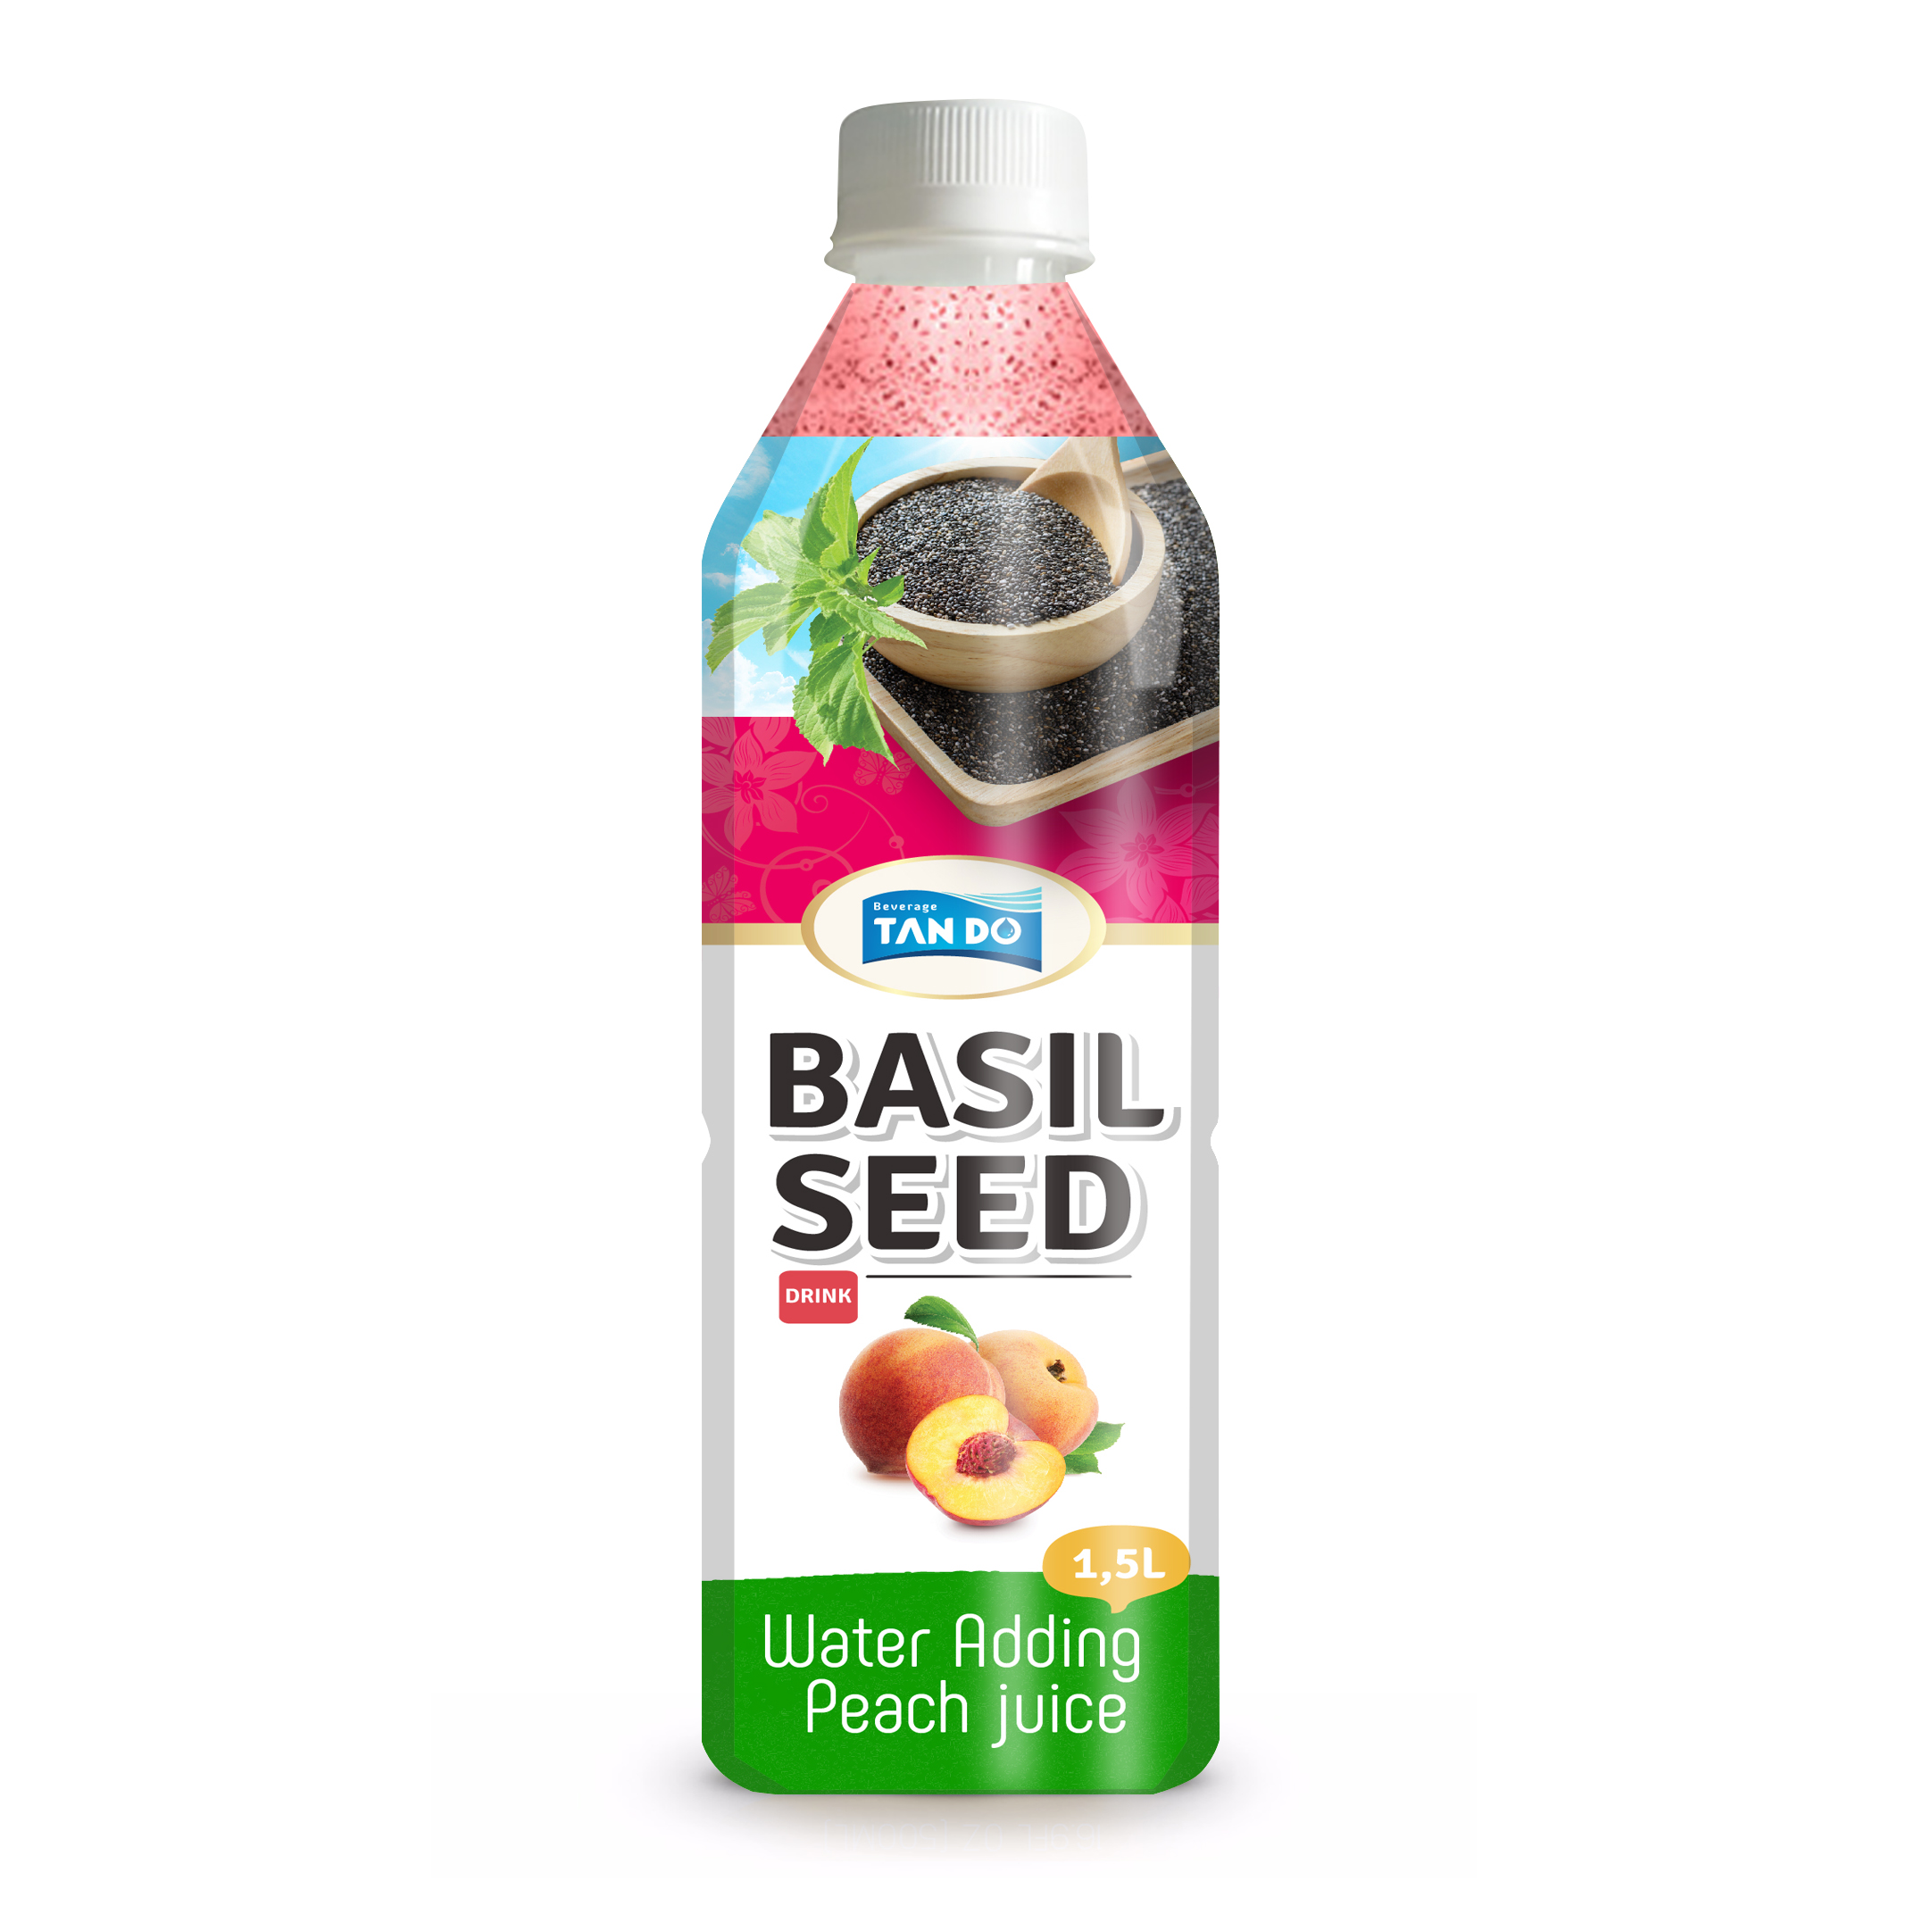 basil seed drink